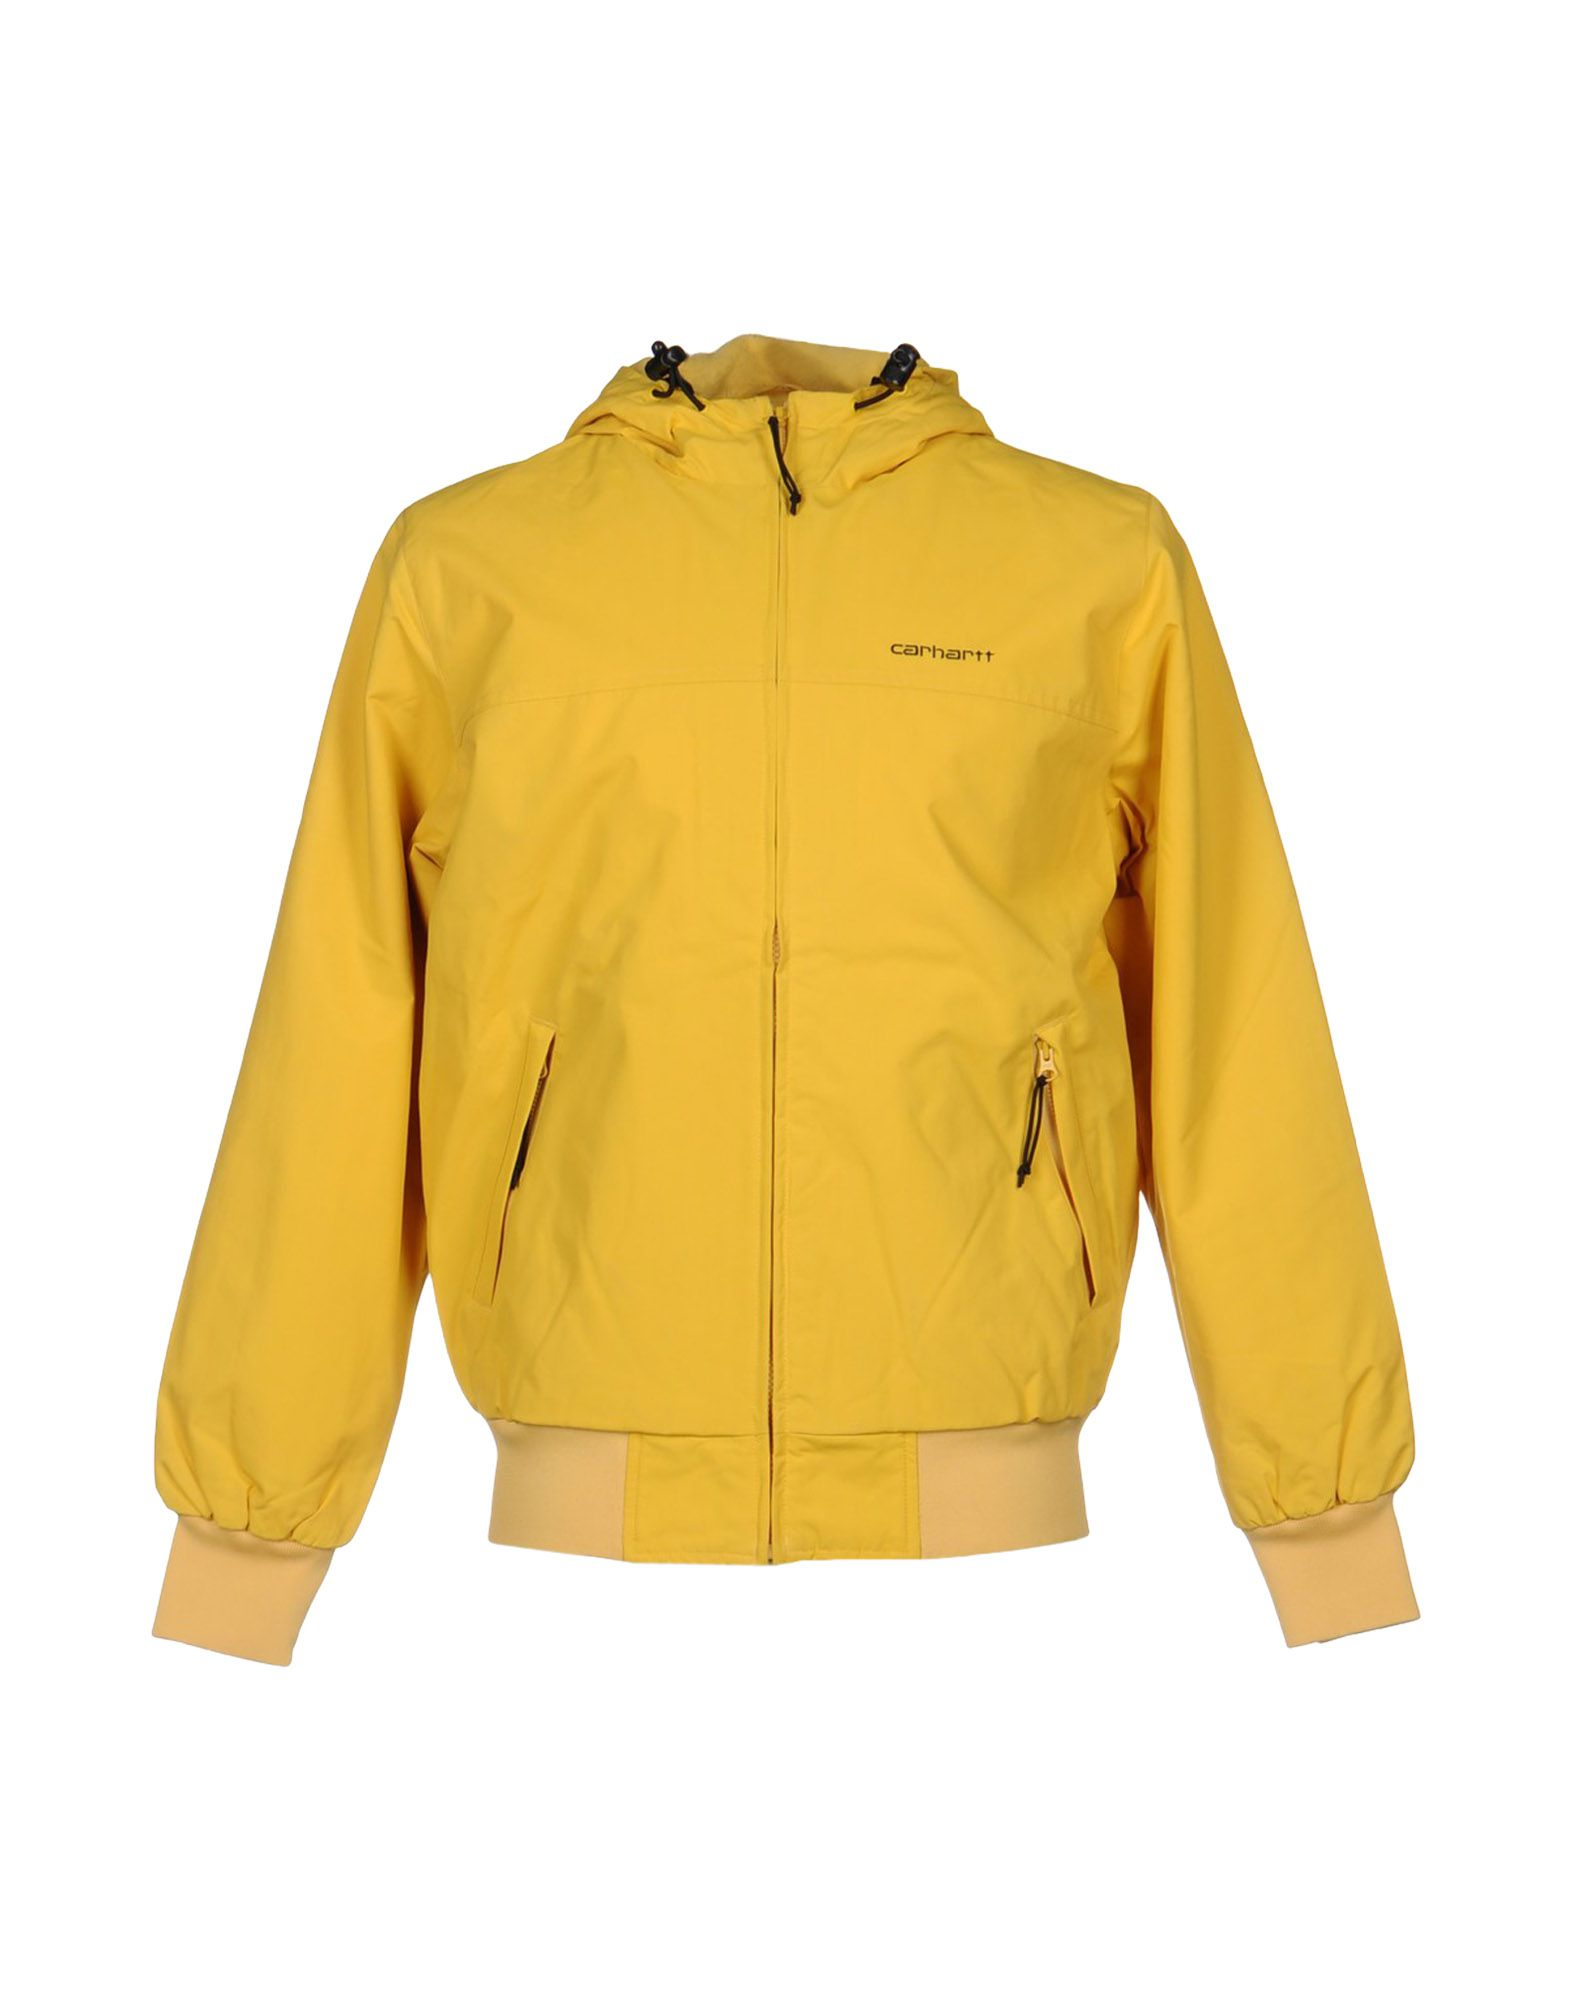 Lyst - Carhartt Jacket in Yellow for Men